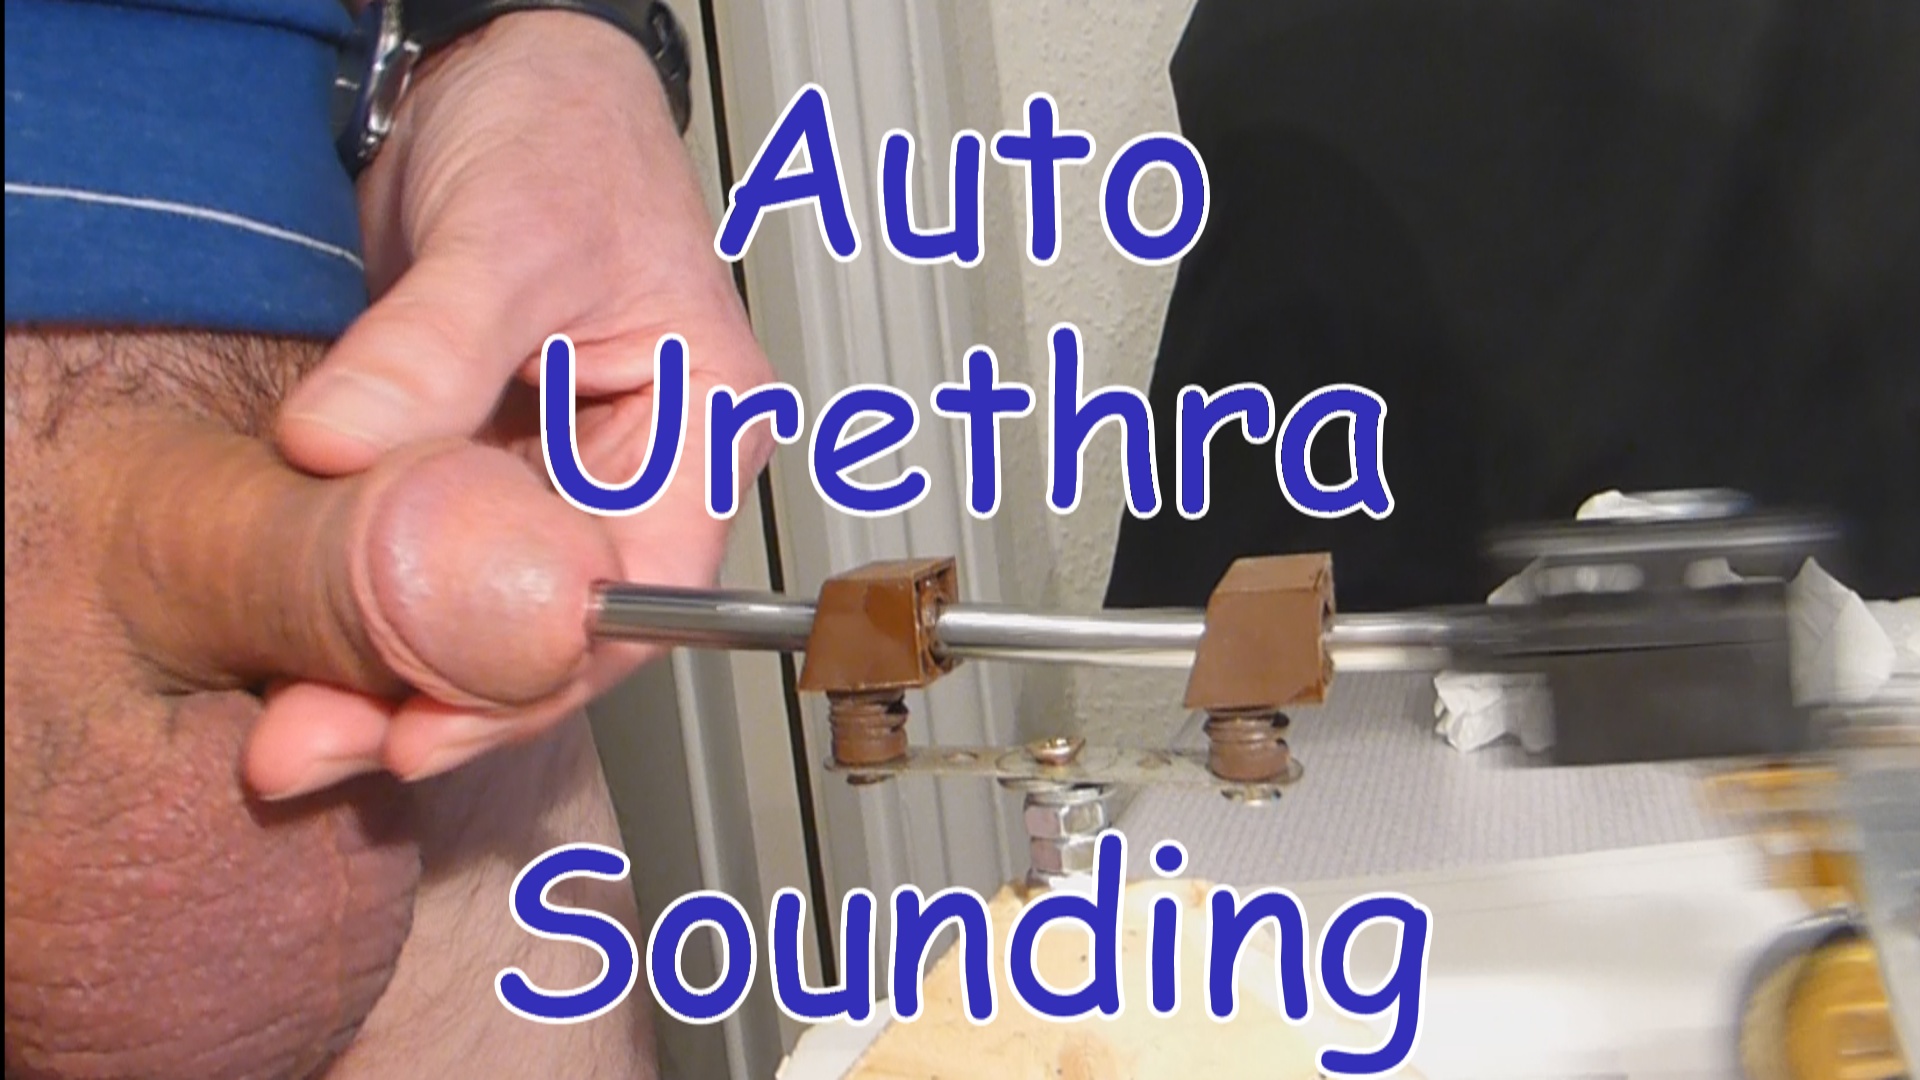 Auto Urethra Sounding